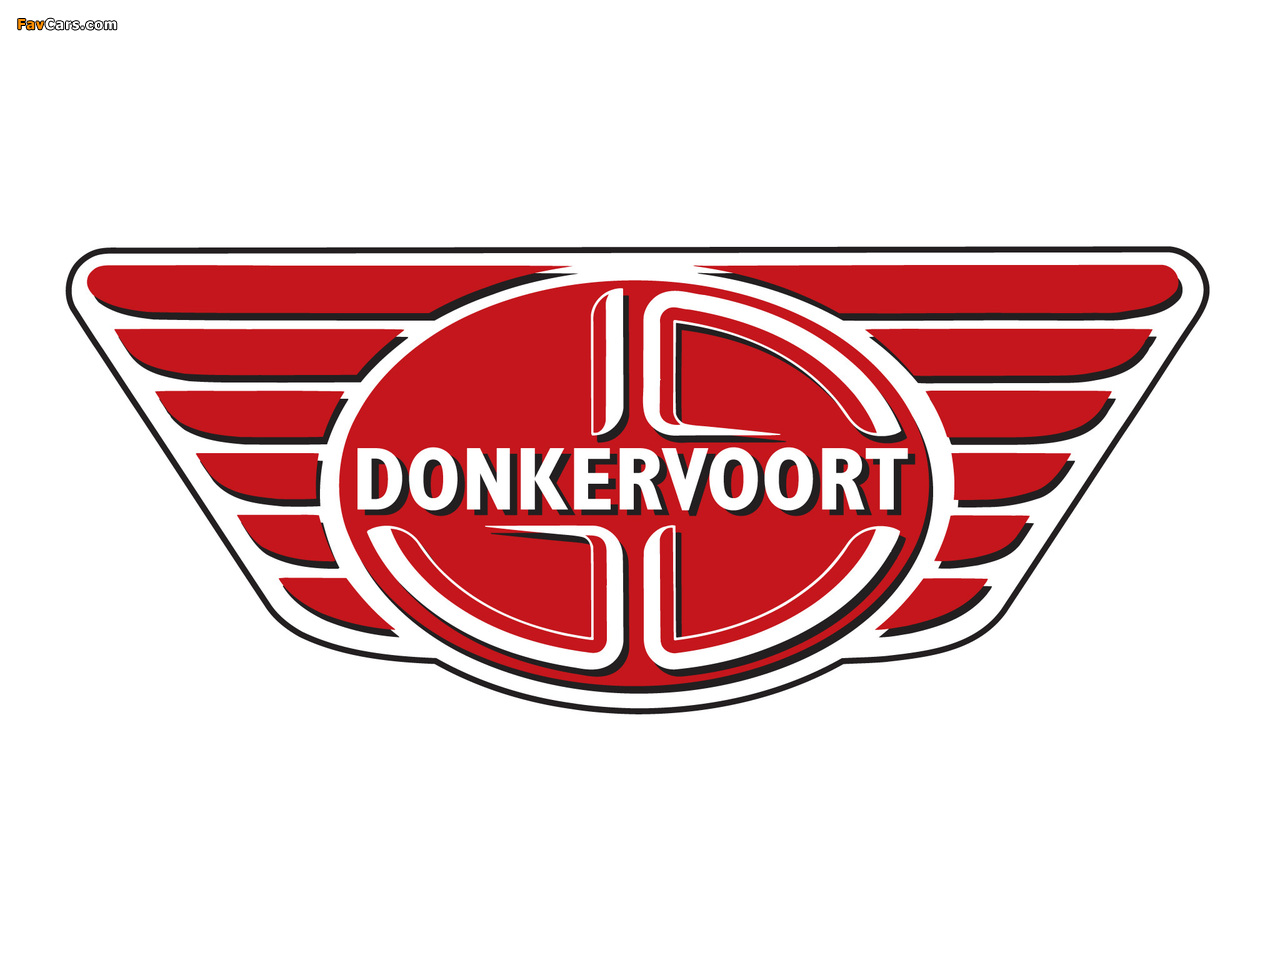 Donkervoort photos (1280 x 960)